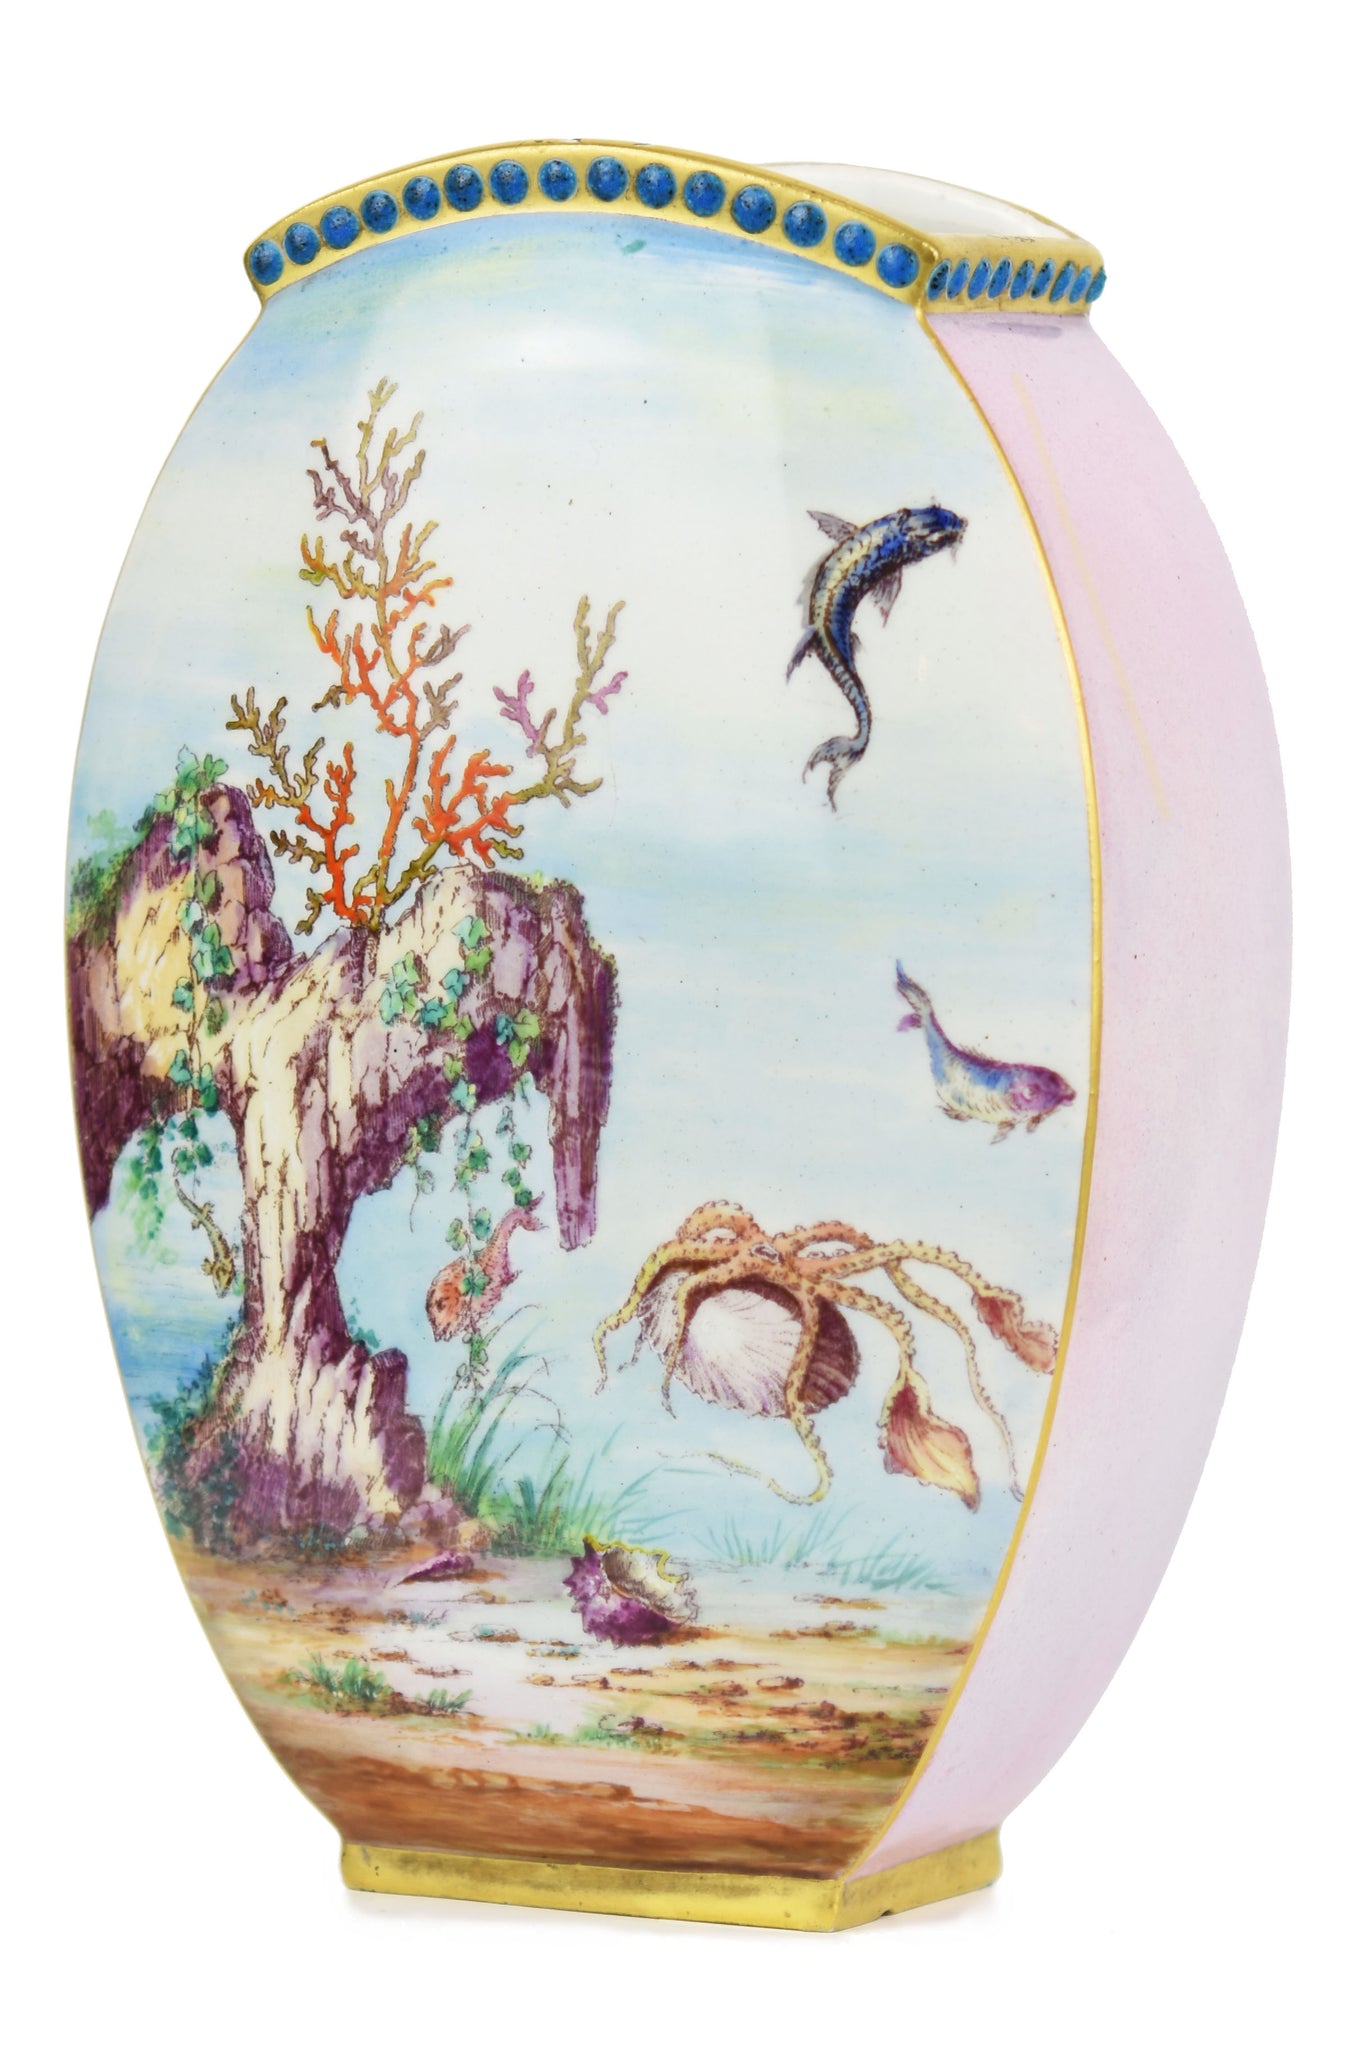 Limoge Porcelain Japanese Style Vase depicting Under Water Scenes c.1880